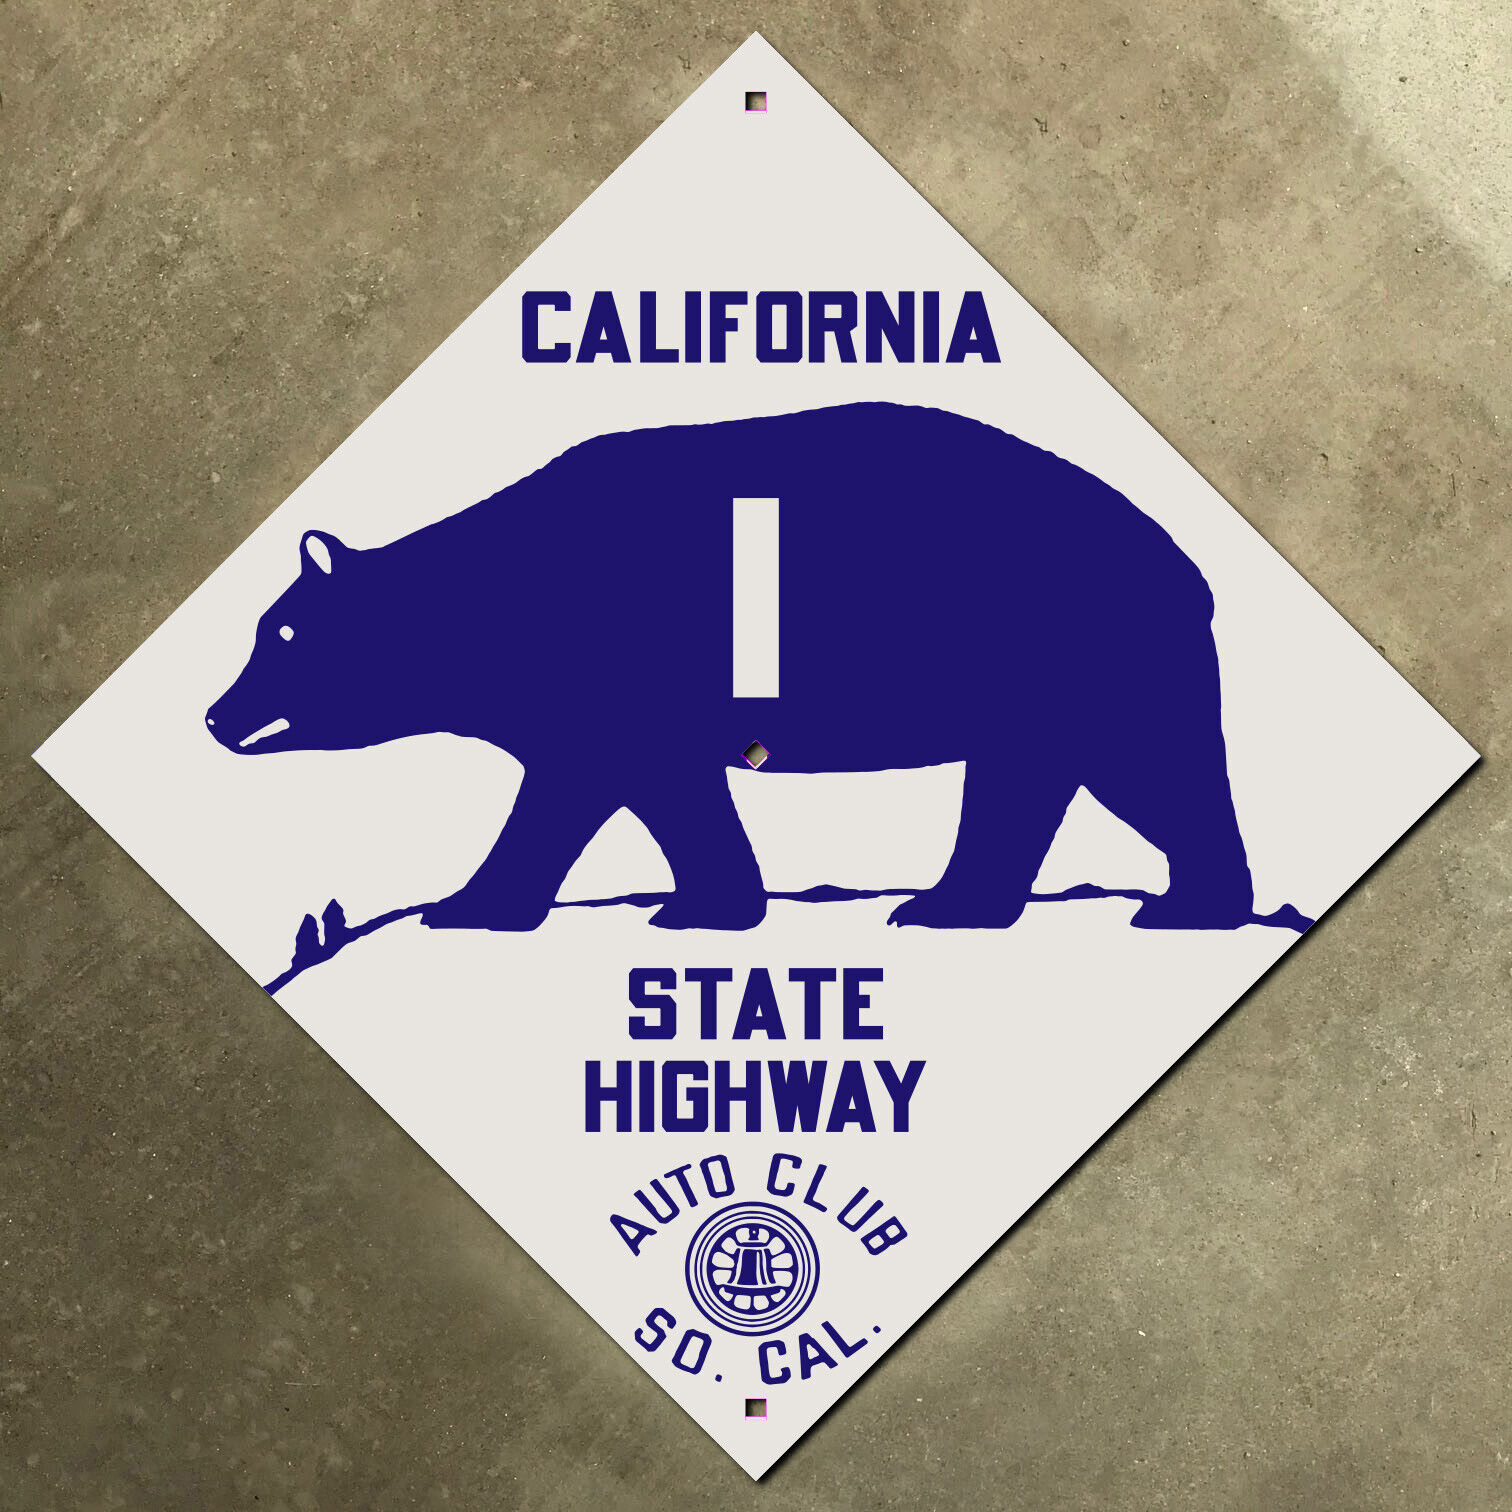 California state highway 1 ACSC road sign auto club AAA diamond 1929 bear PCH